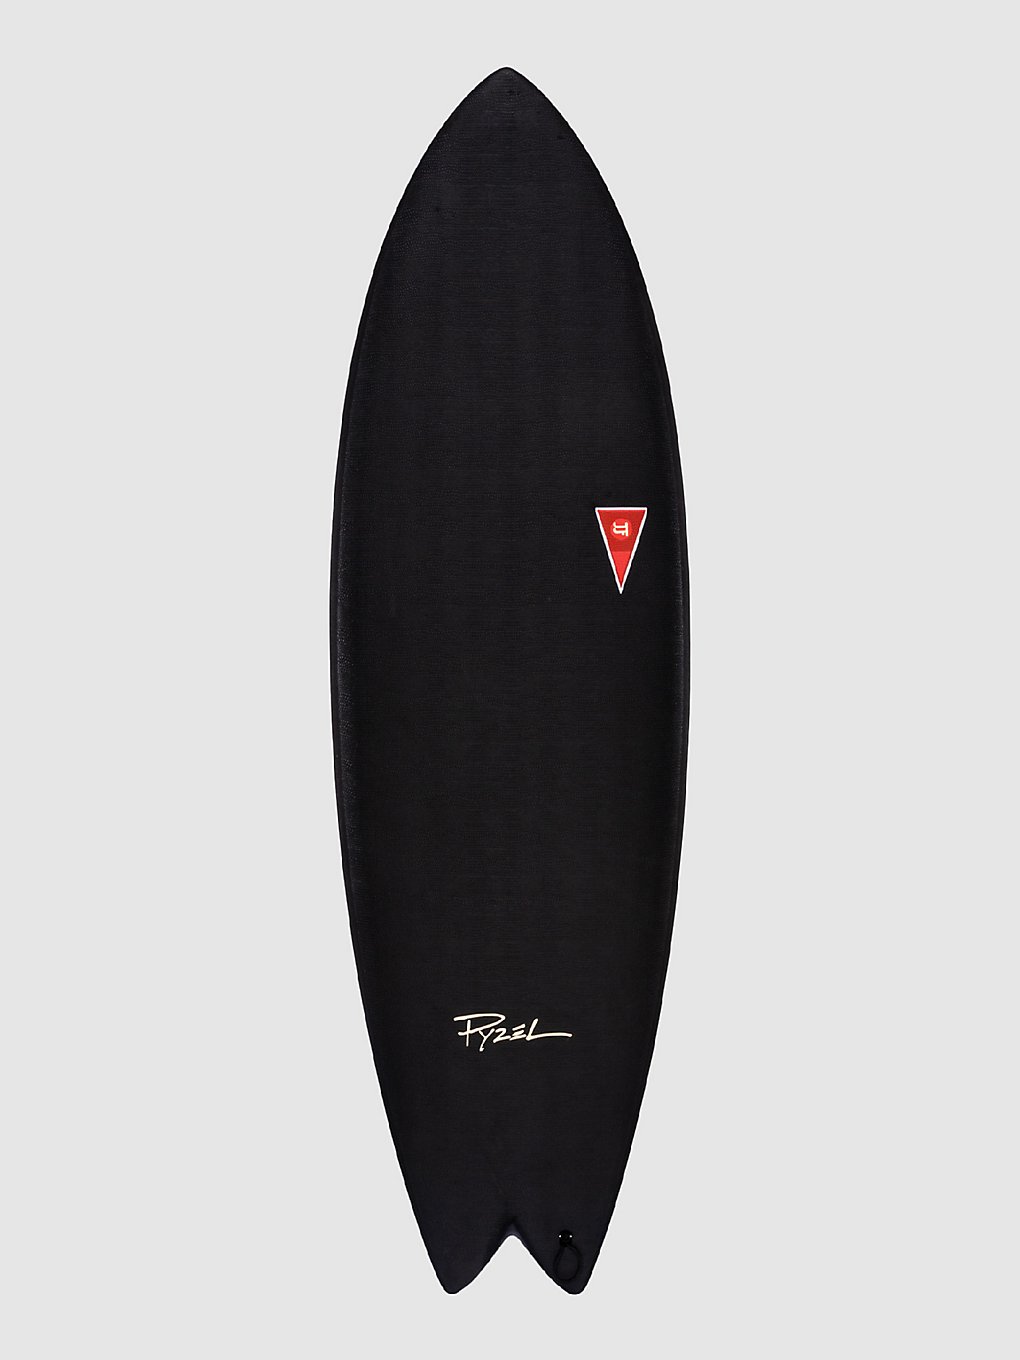 JJF by Pyzel AstroFish 6'0 Surfboard zwart